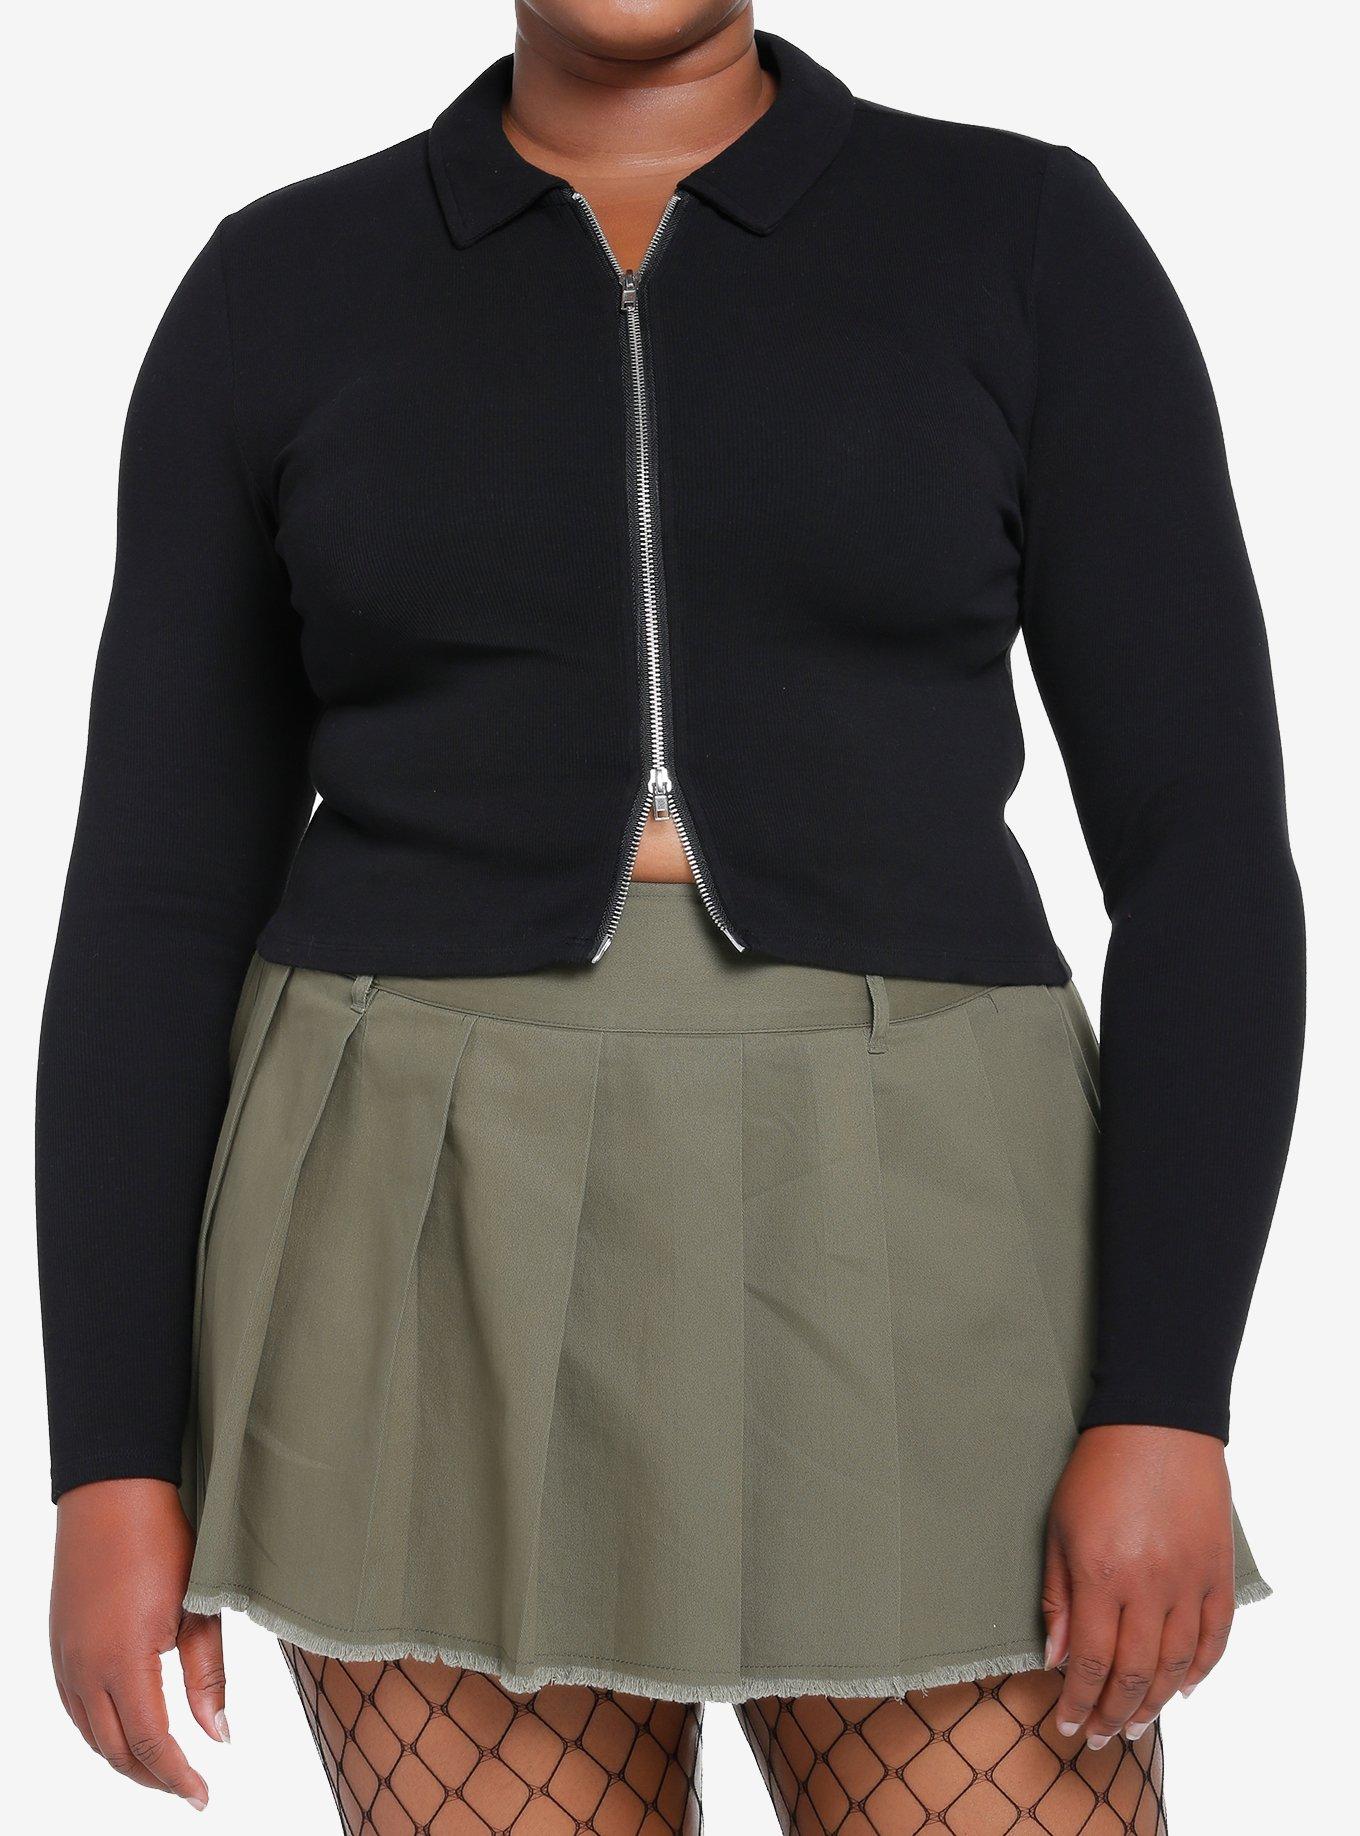 Social Collision Black Zipper Girls Long-Sleeve Top Plus Size, BLACK, hi-res